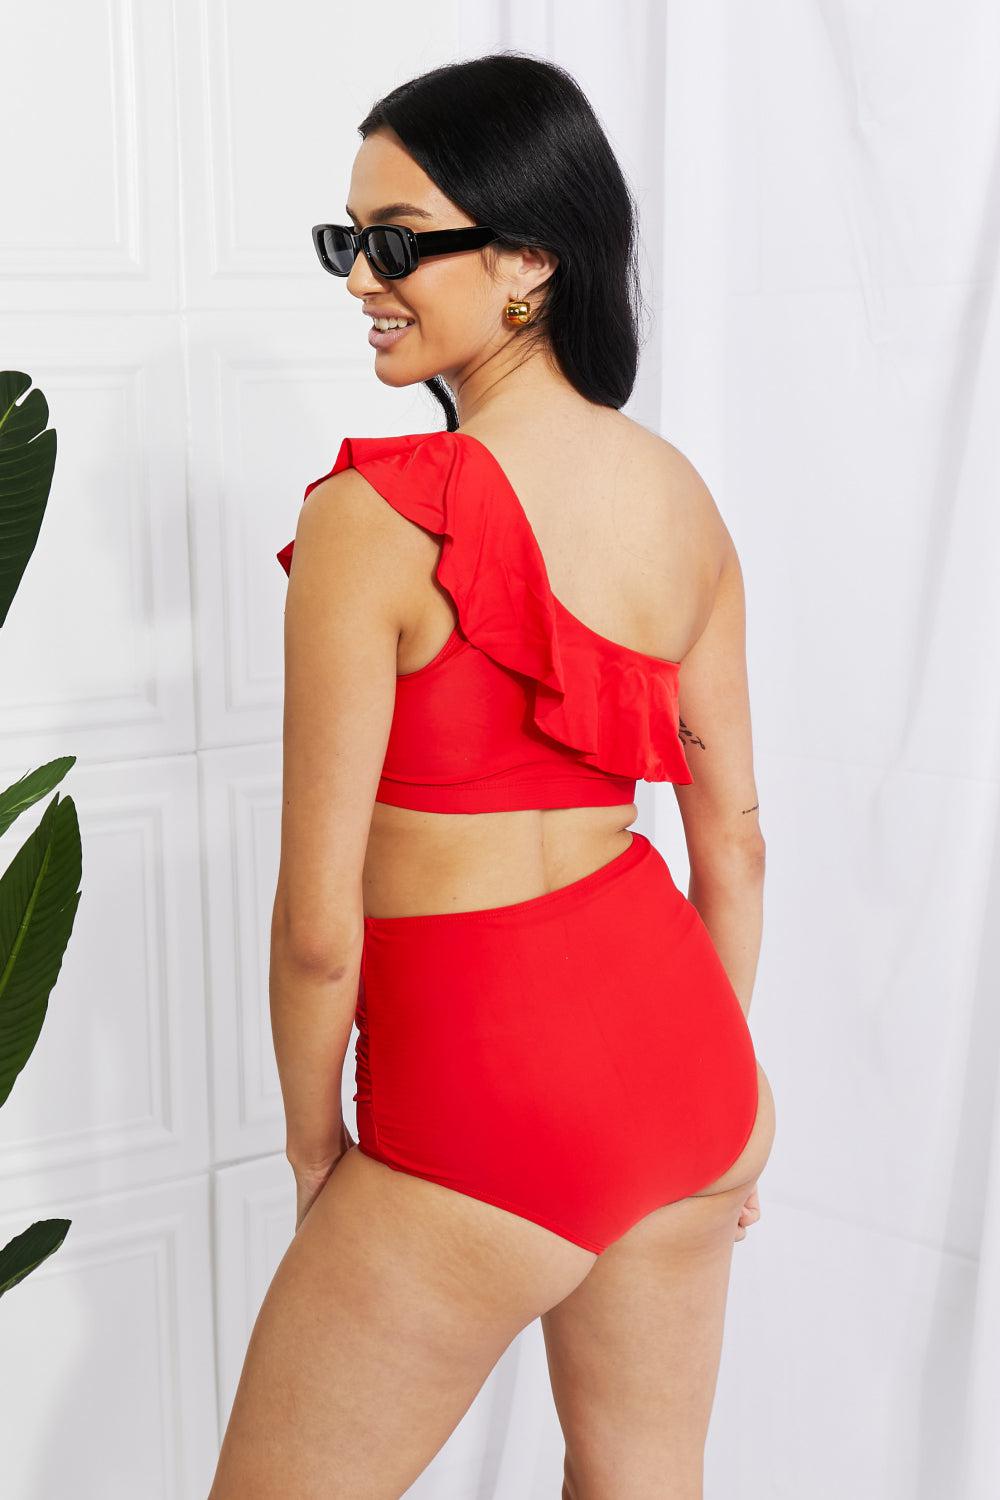 Marina West Swim Seaside Romance Ruffle One-Shoulder Bikini in Red BLUE ZONE PLANET